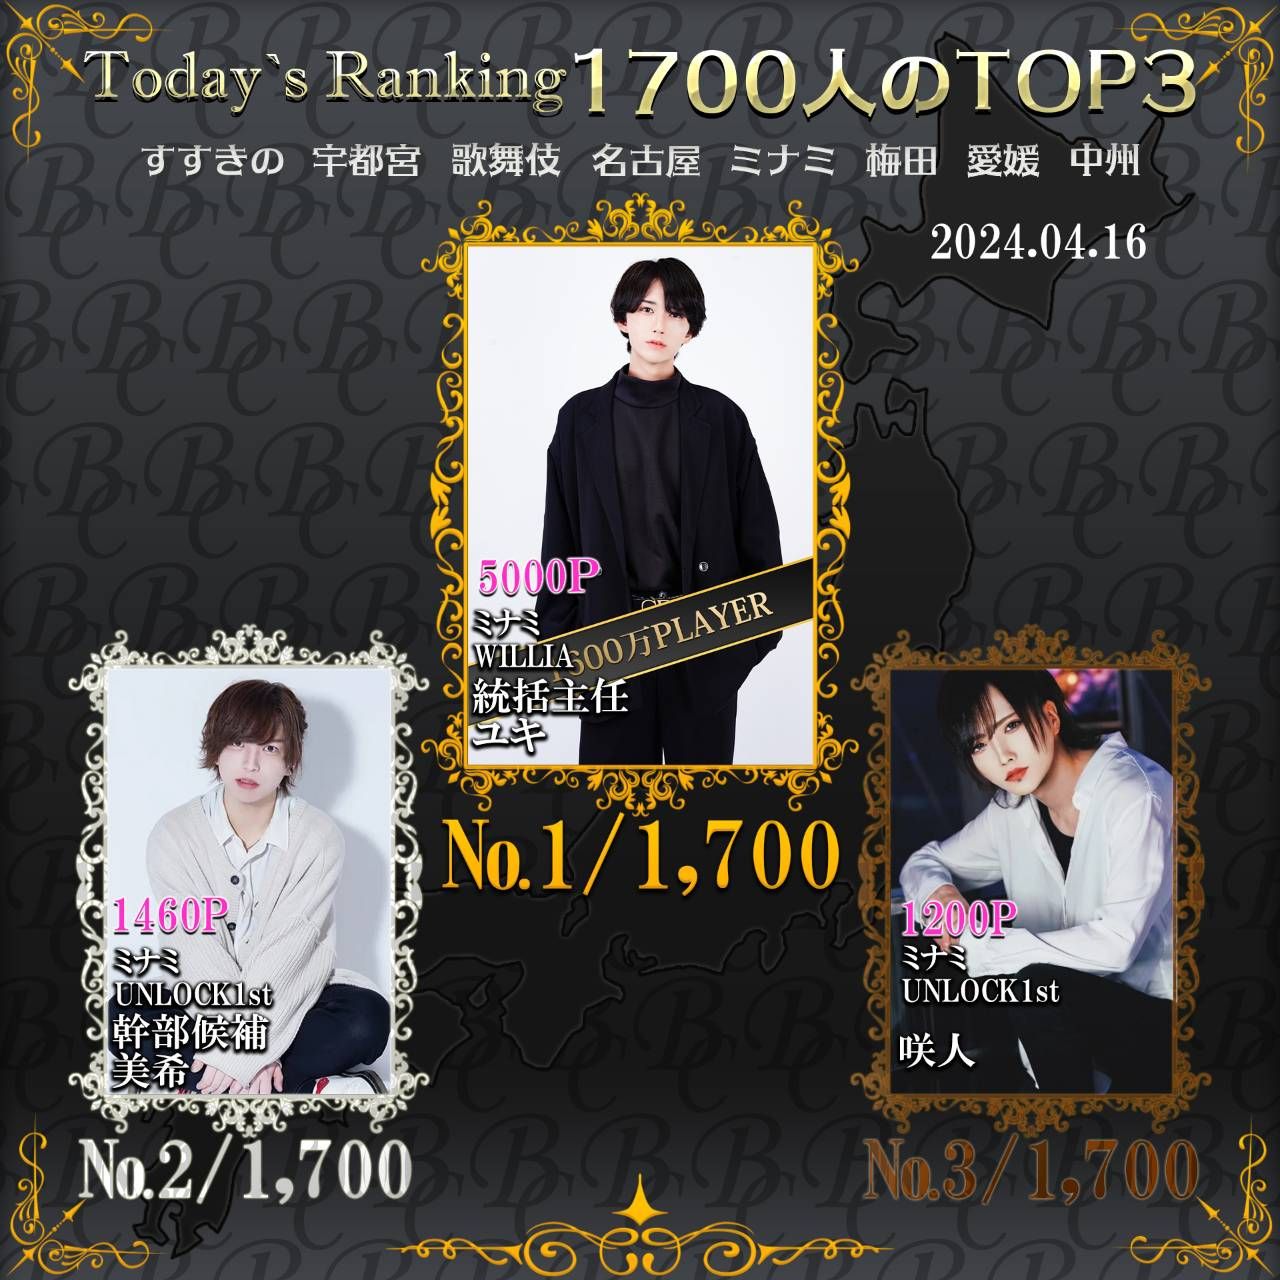 4/16 Today’s Ranking